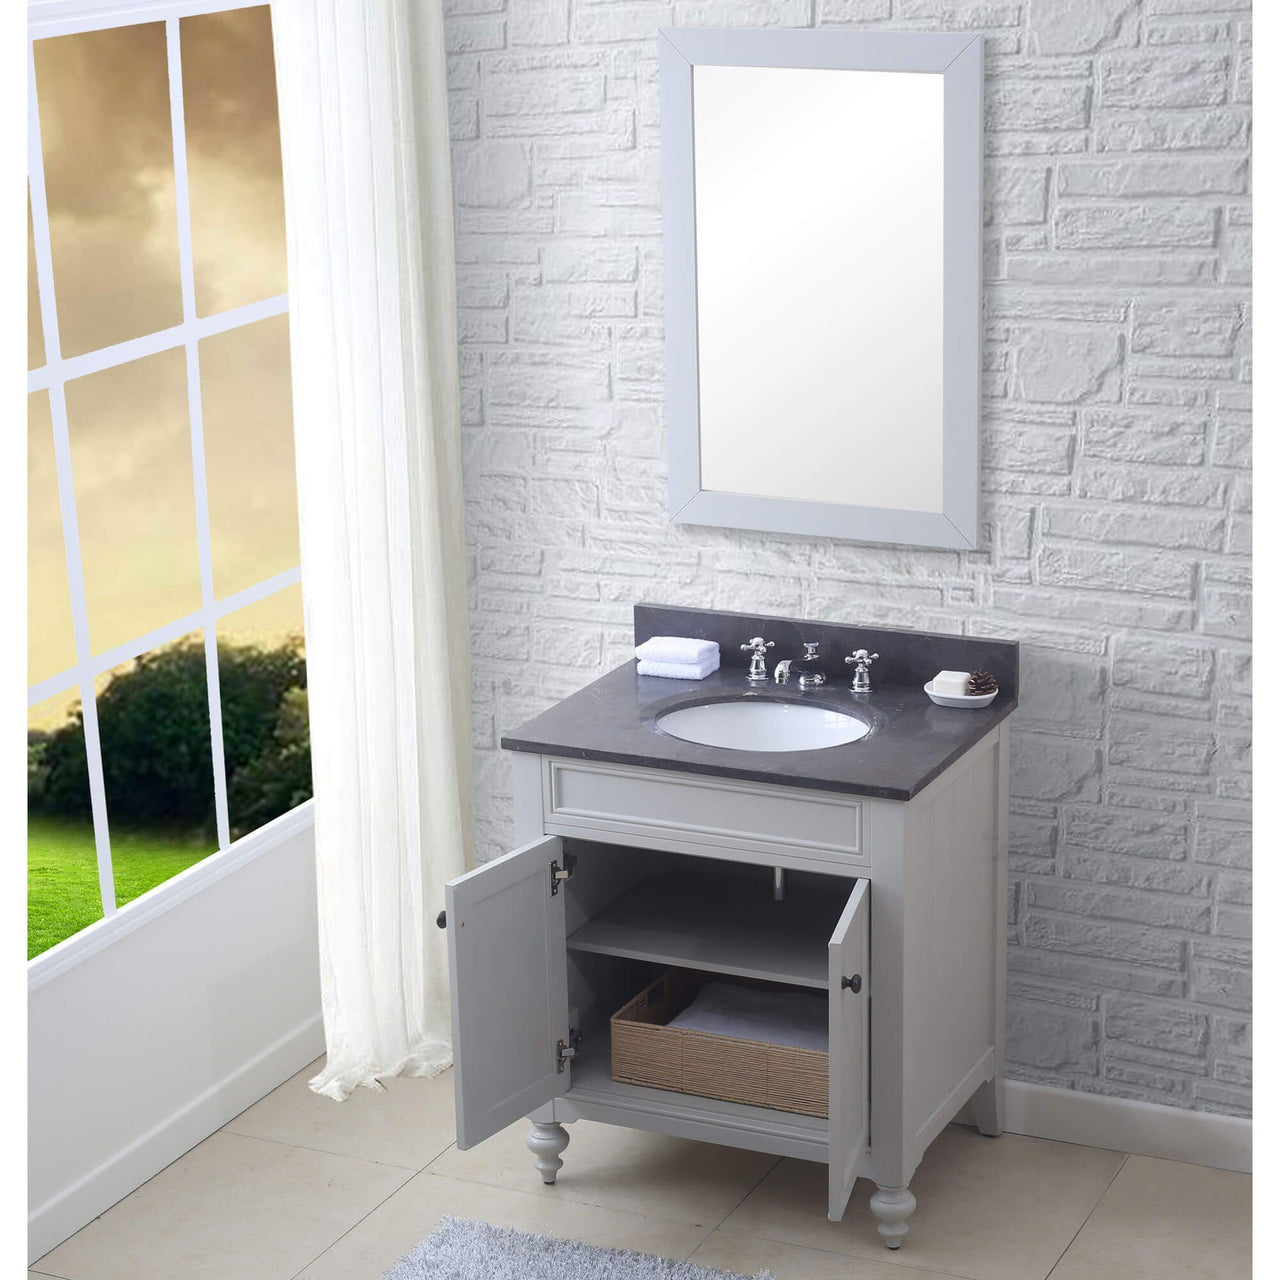 POTENZA 30" Earl Grey Single Sink Bathroom Vanity With Matching Framed Mirror Vanity Water Creation 